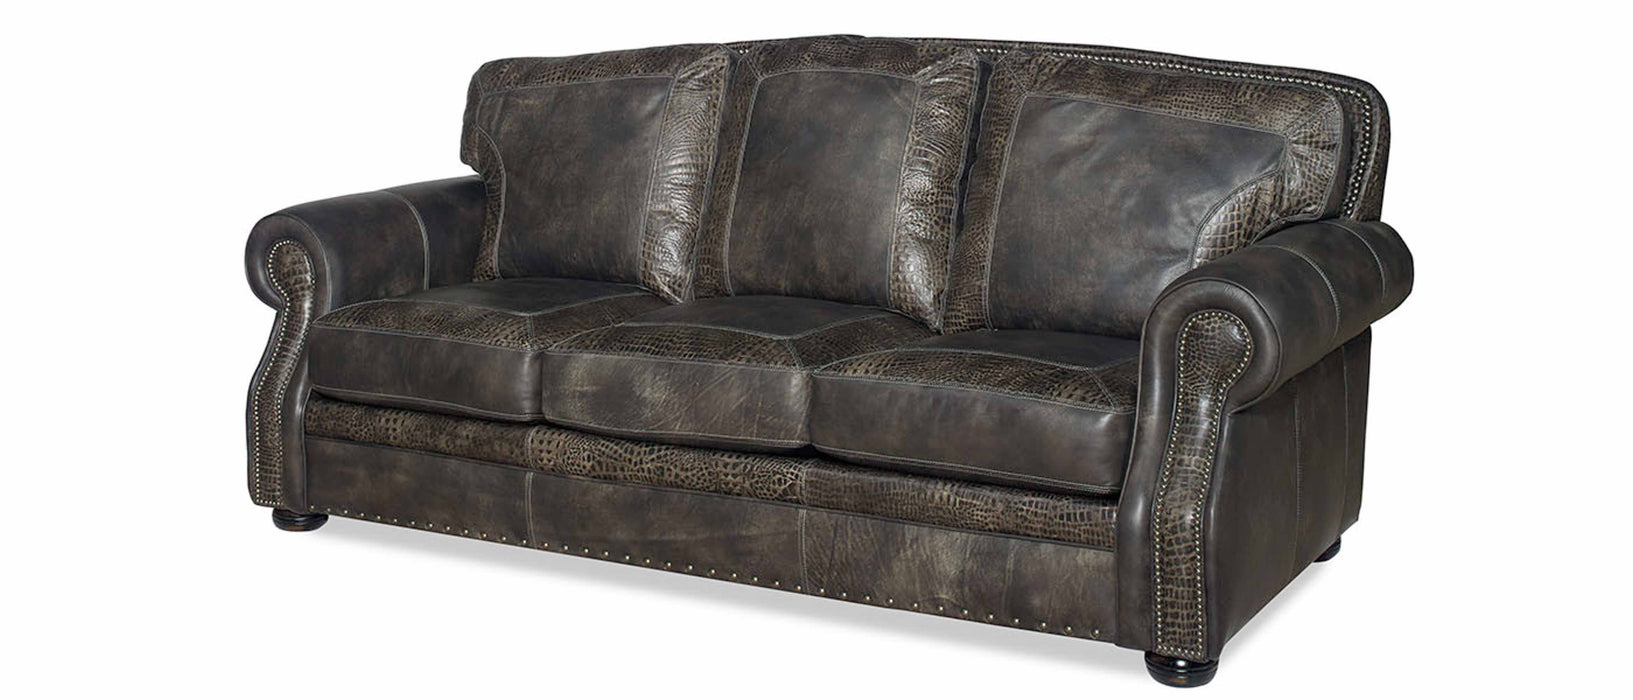 Sebastian Leather Queen Size Sofa Sleeper